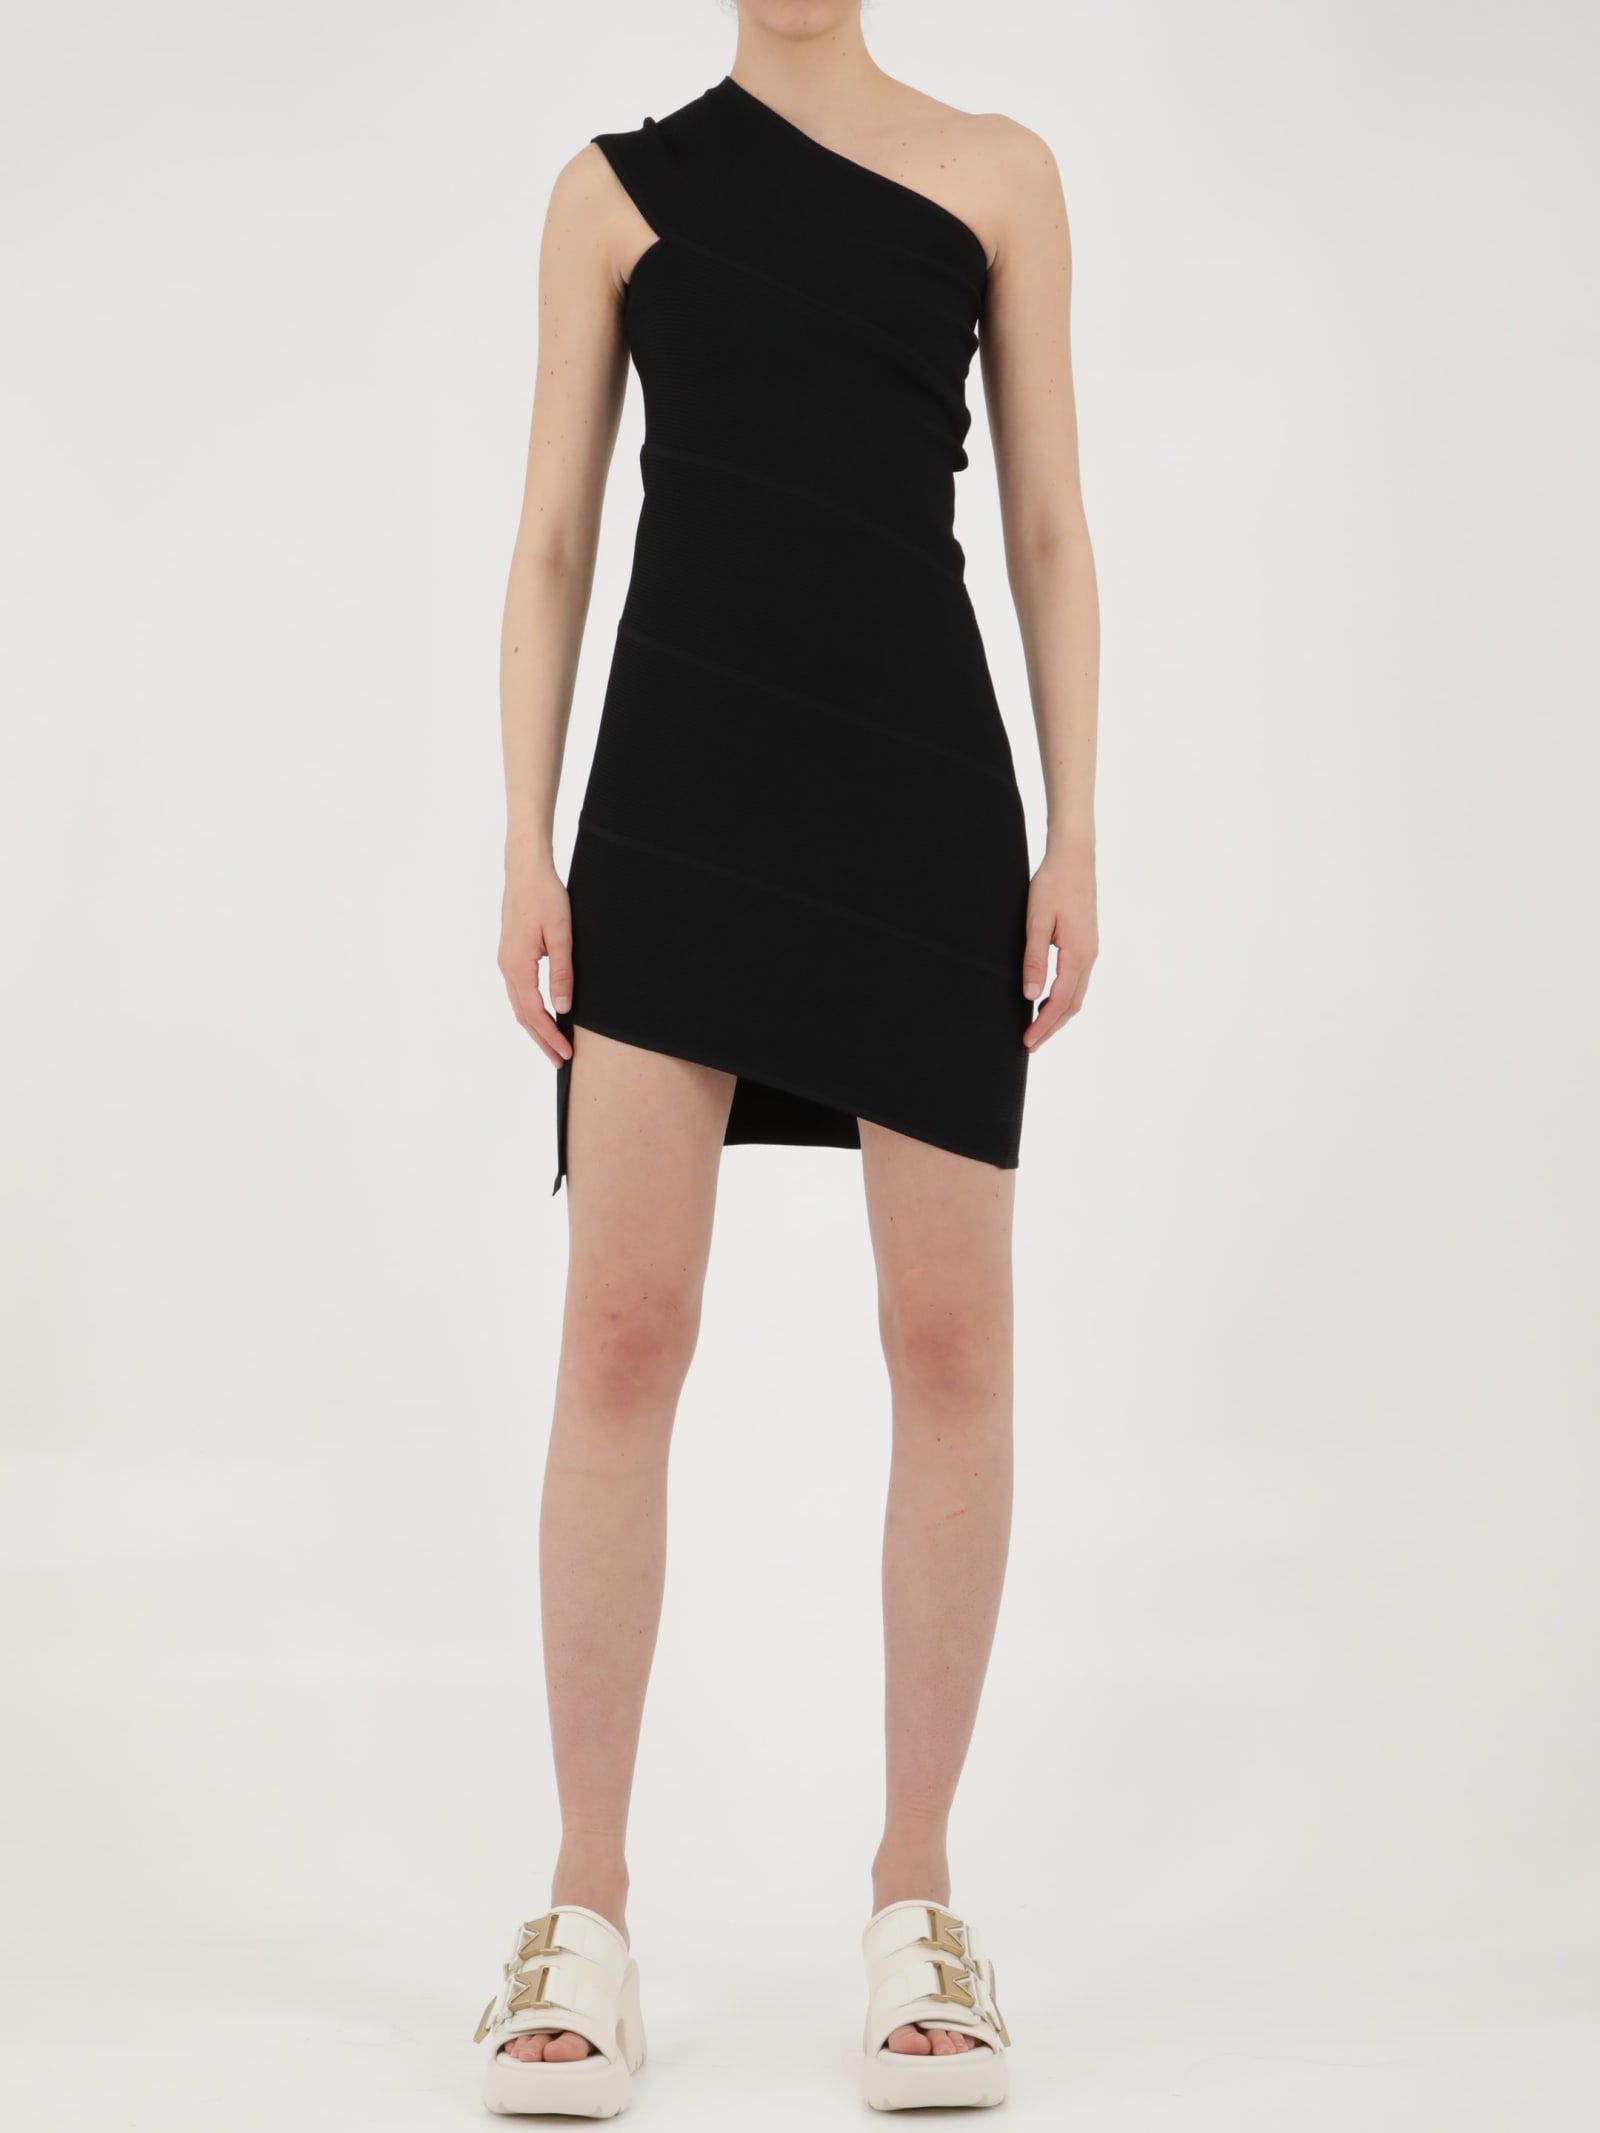 Bottega Veneta One-shoulder Black Dress